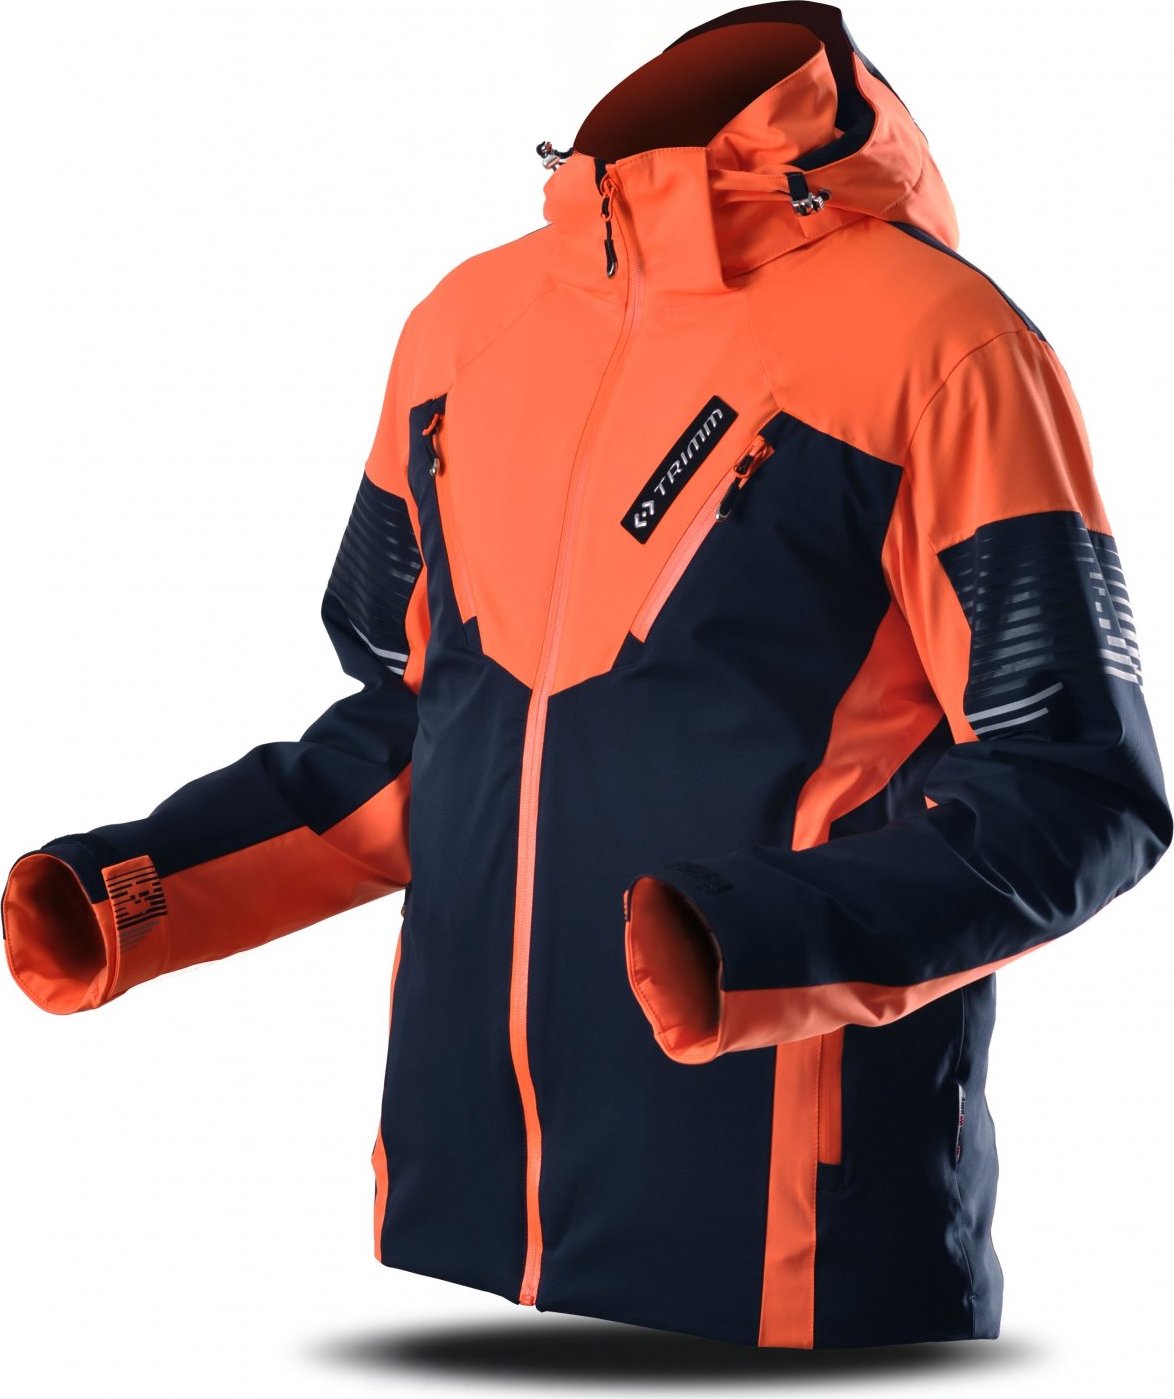 Pánská lyžařská bunda TRIMM Avalon dark blue/signal orange Velikost: L, Barva: dark blue/signal orange